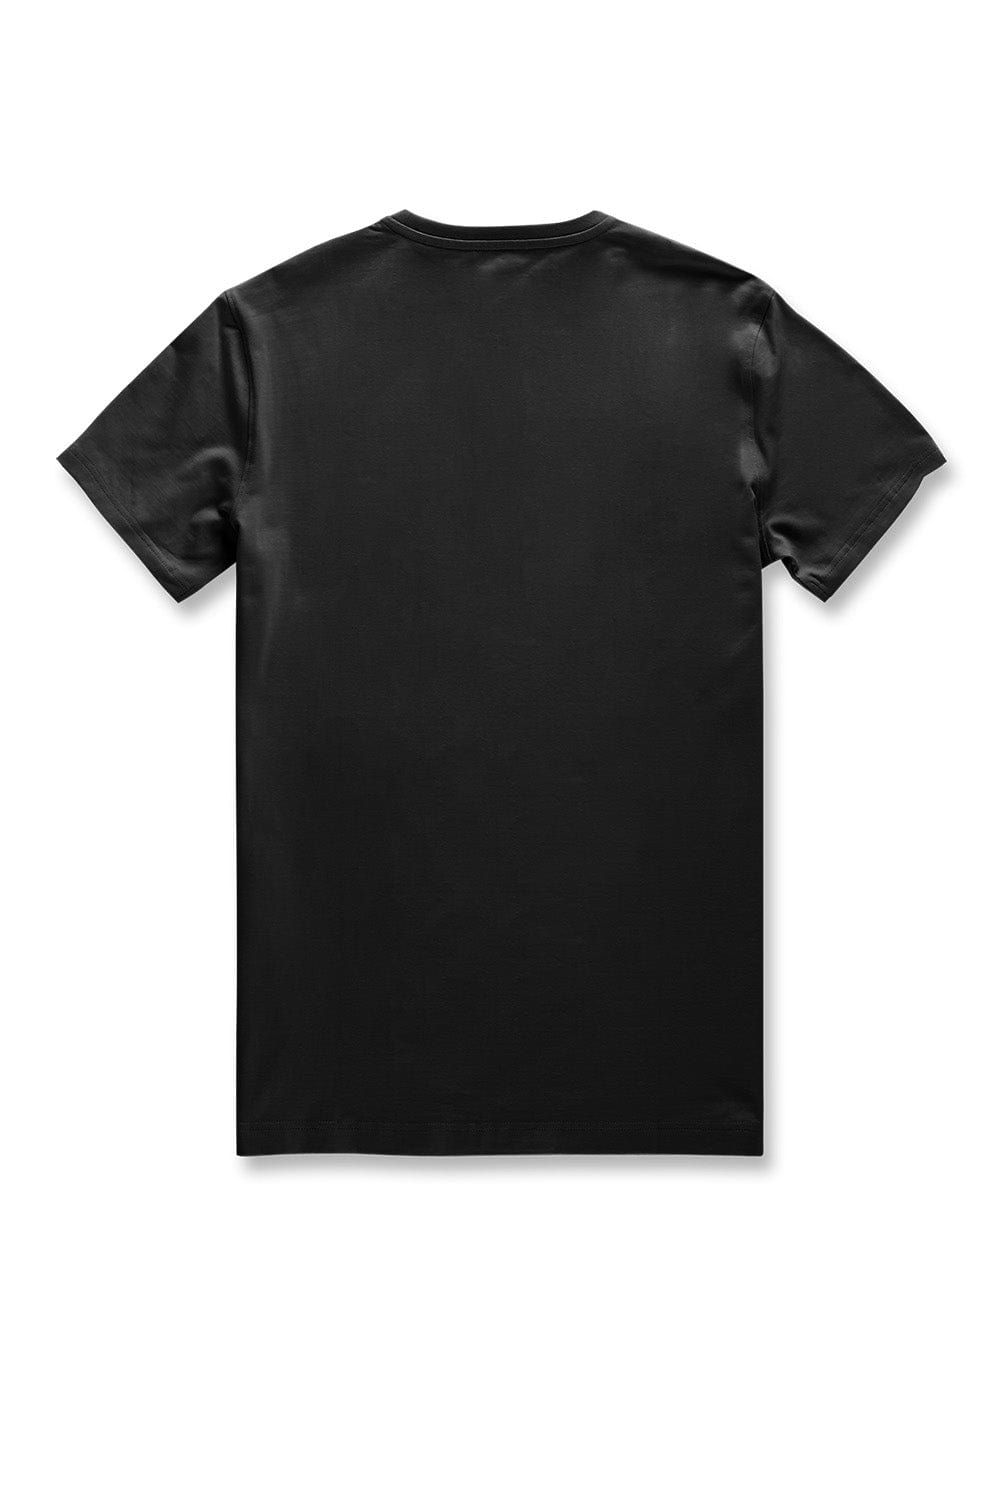 Jordan Craig SYIP T-Shirt (Black)